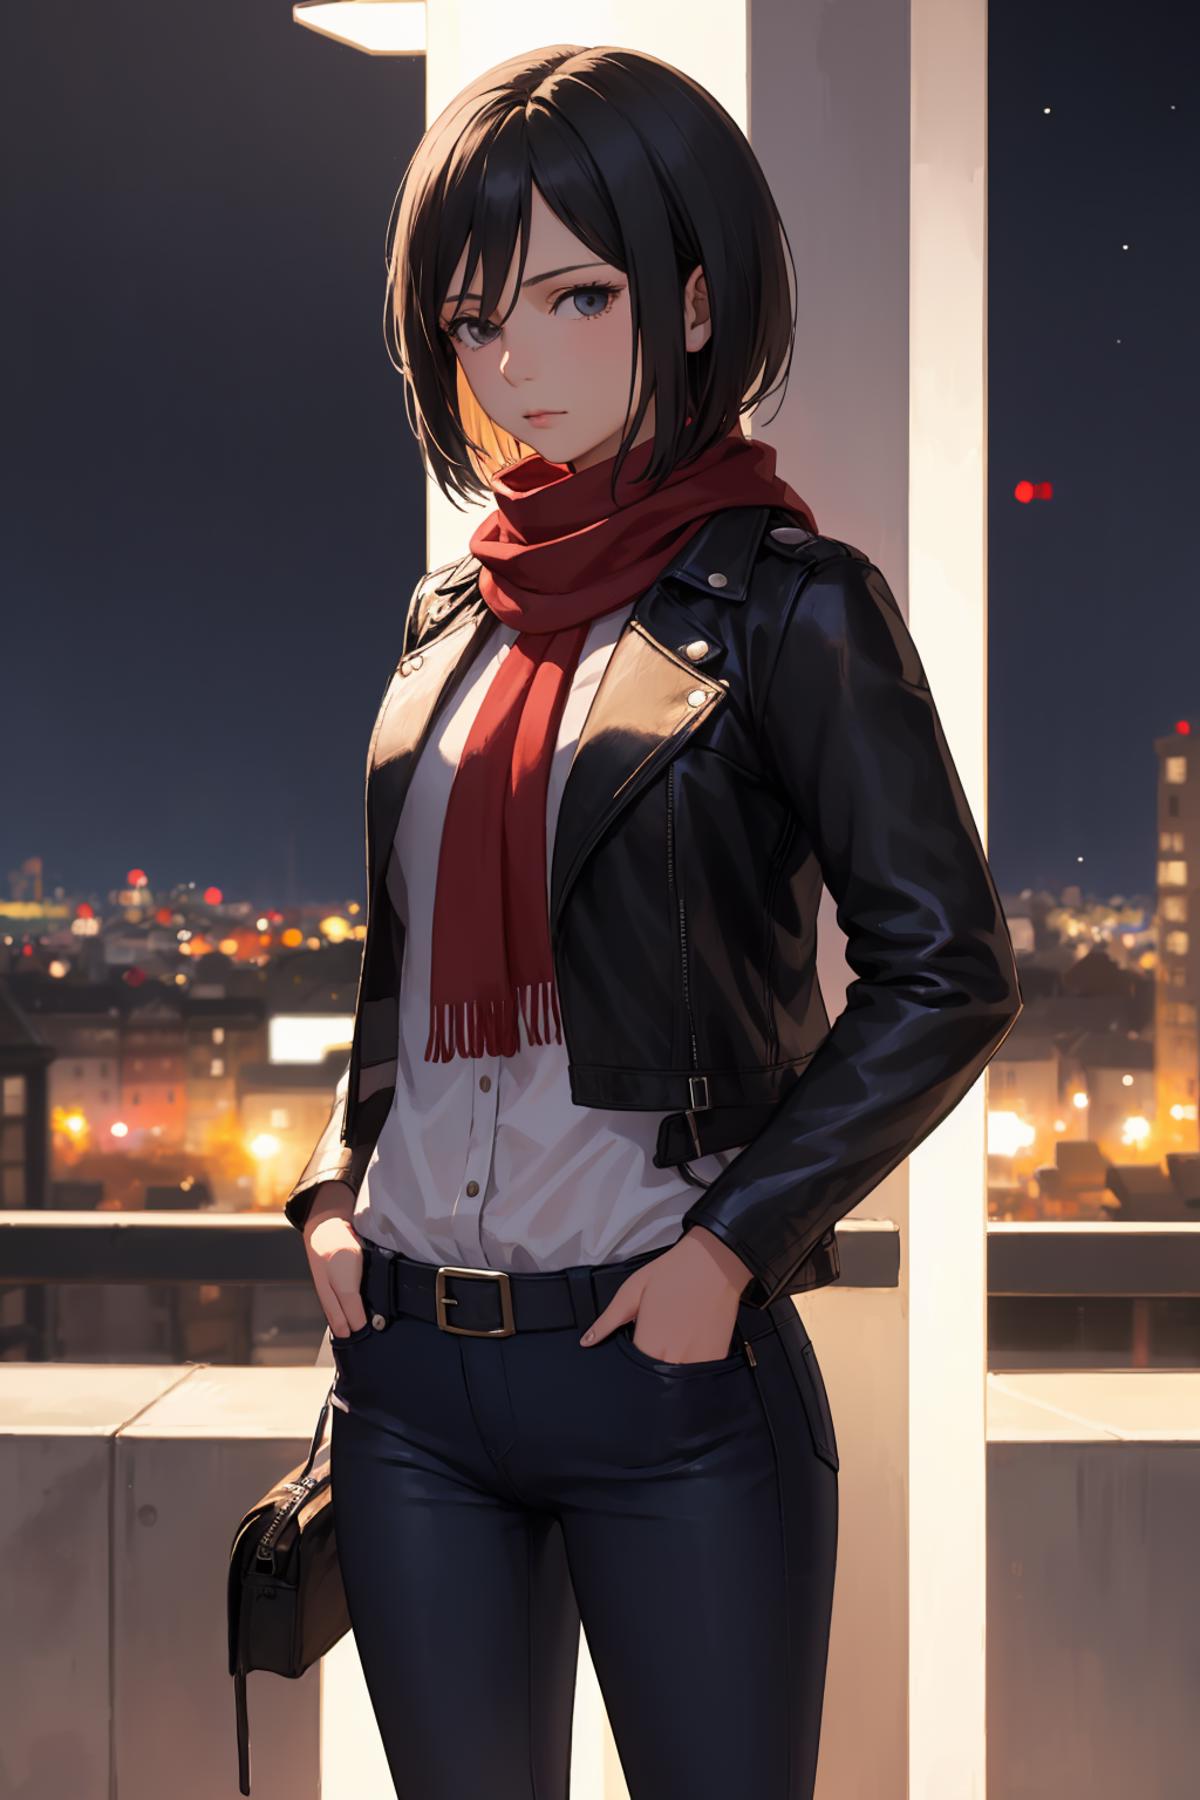 Mikasa Ackerman ミカサ・アッカーマン / Shingeki no Kyojin image by animebronyboy186